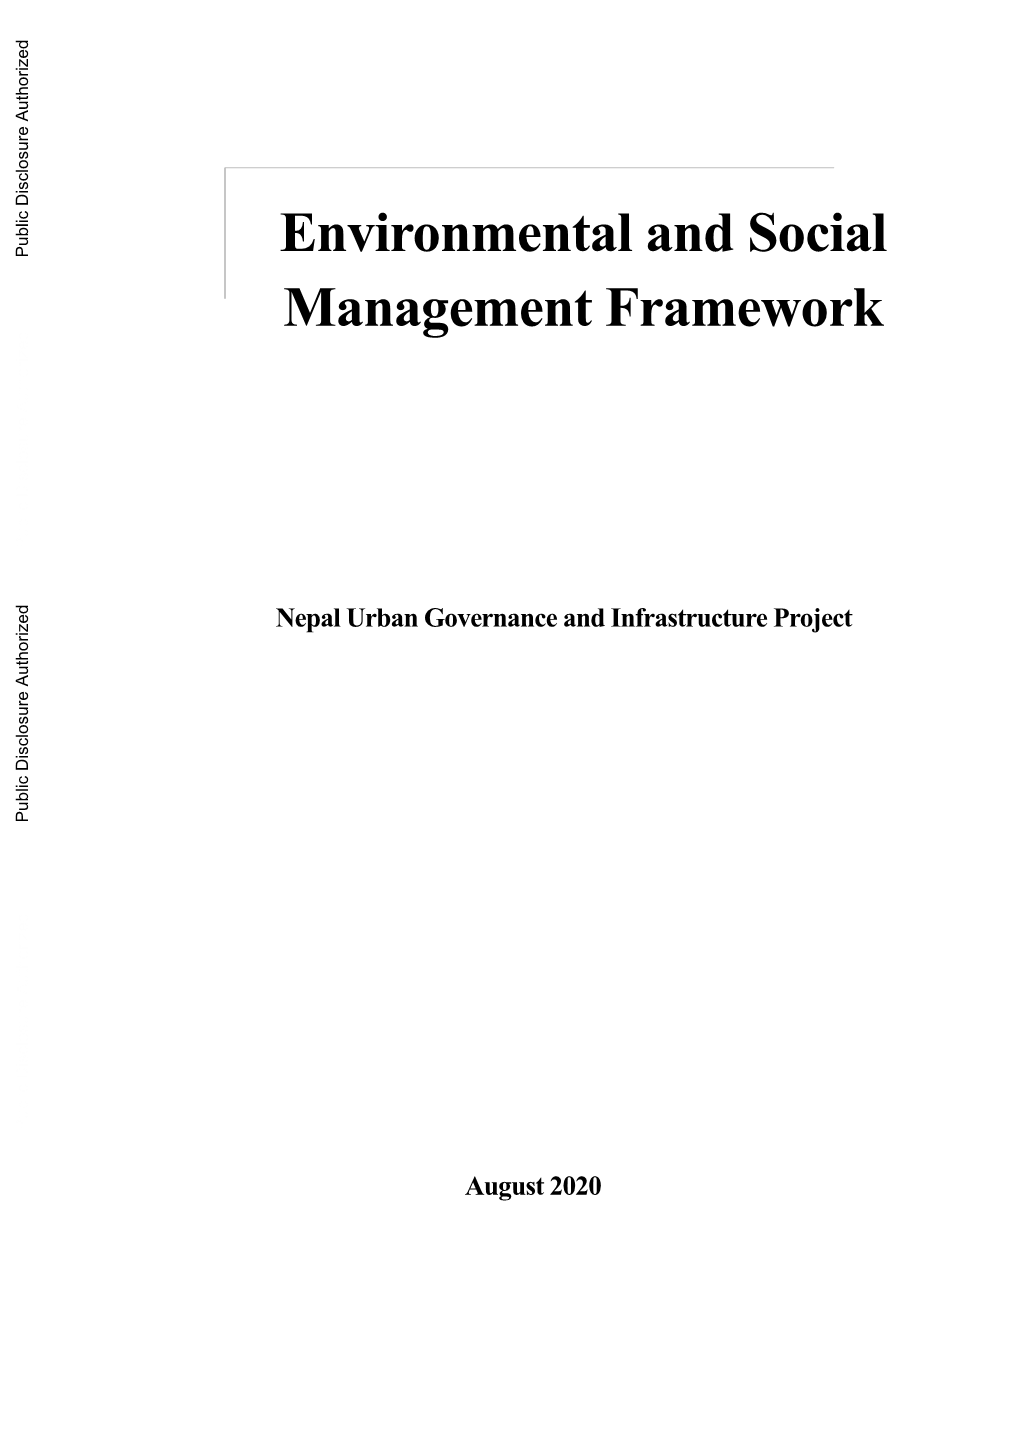 Environmental and Social Management Framework Nepal